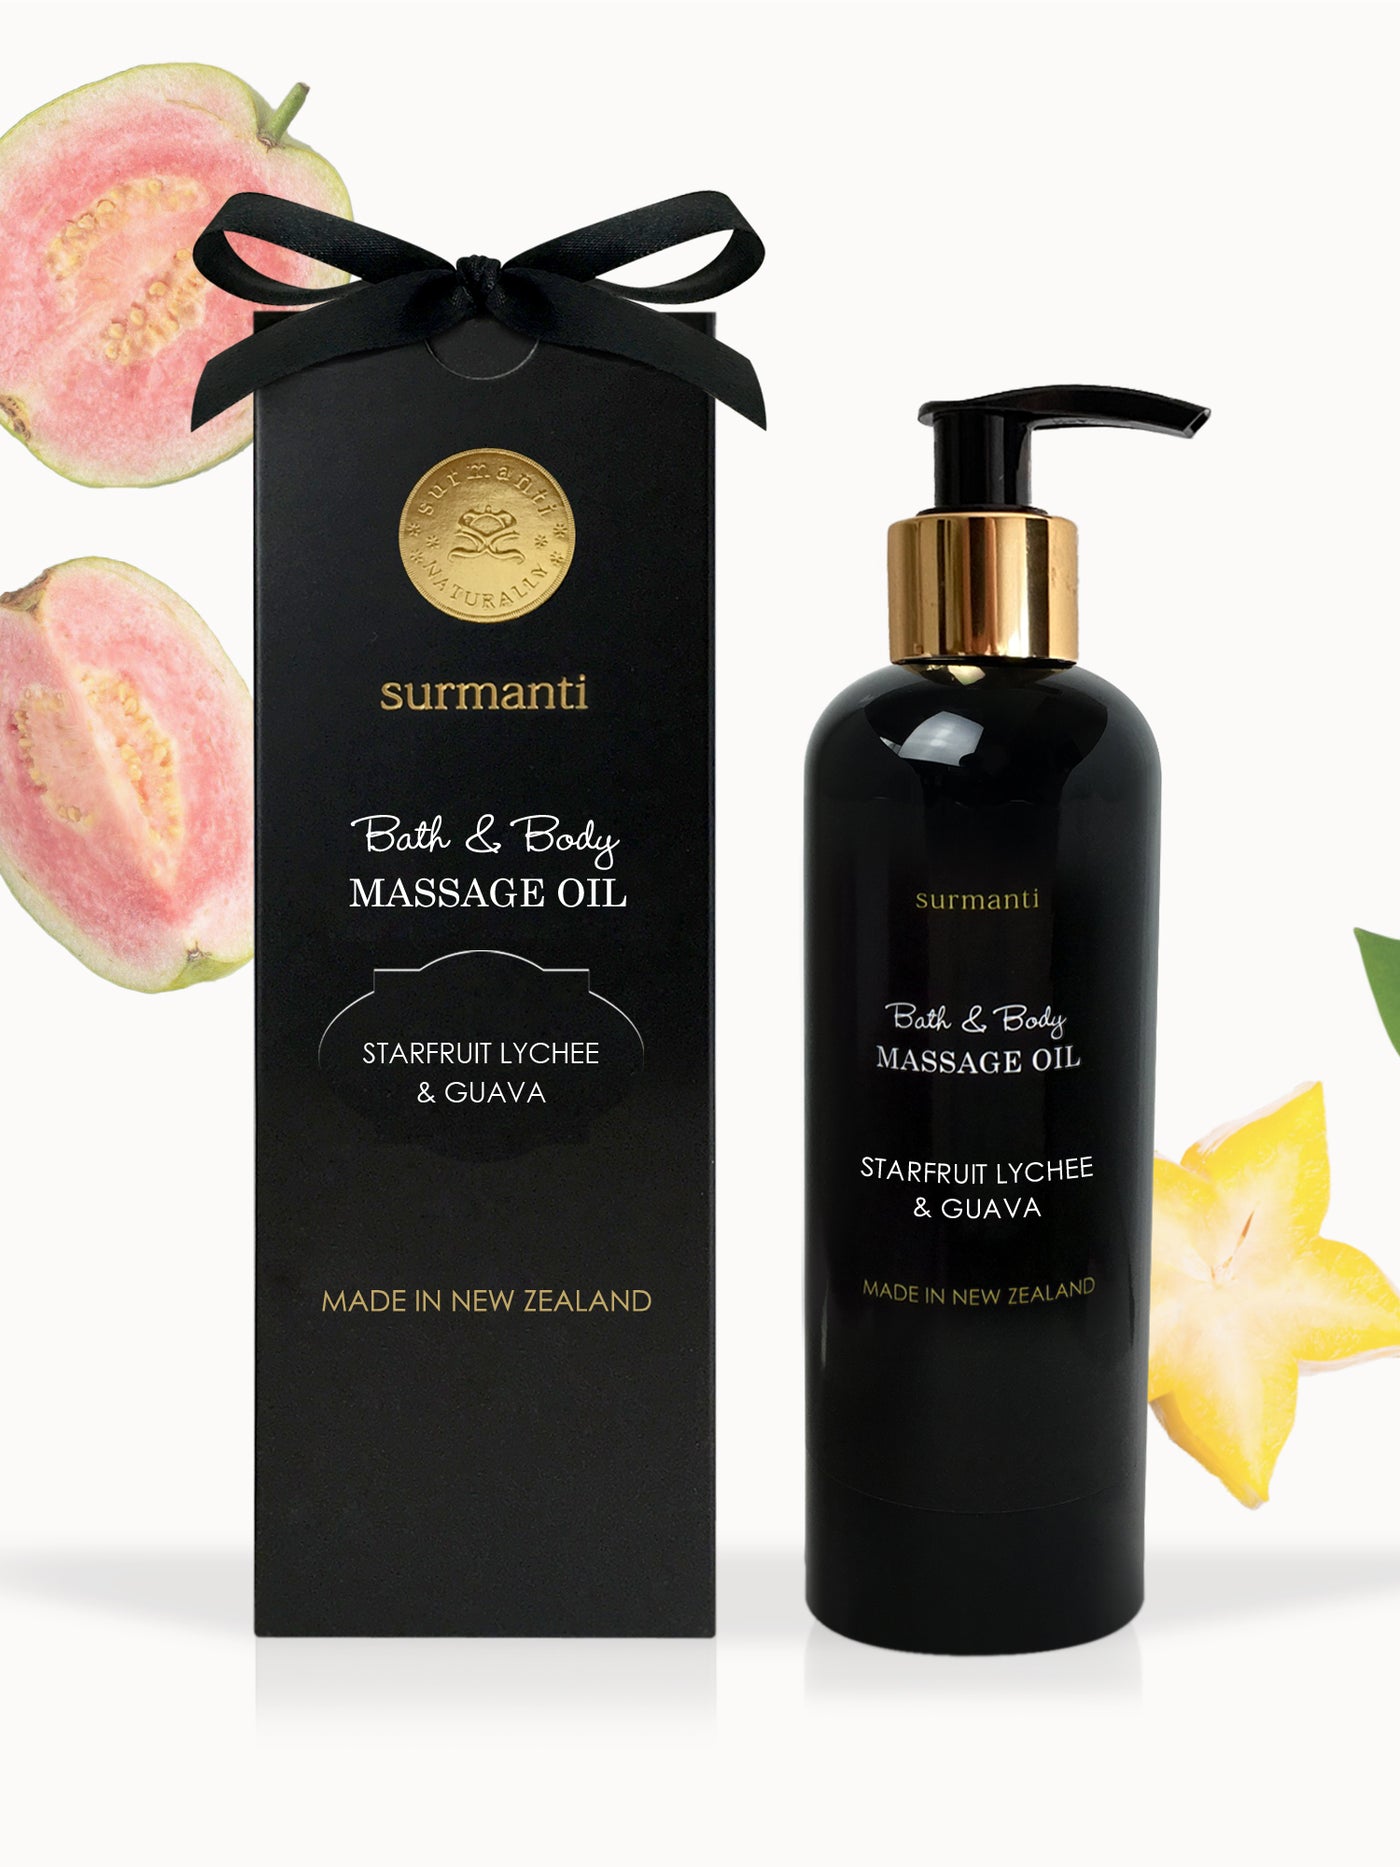 Starfruit Lychee & Guava Bath & Body Massage Oil - Surmanti - Made In New Zealand